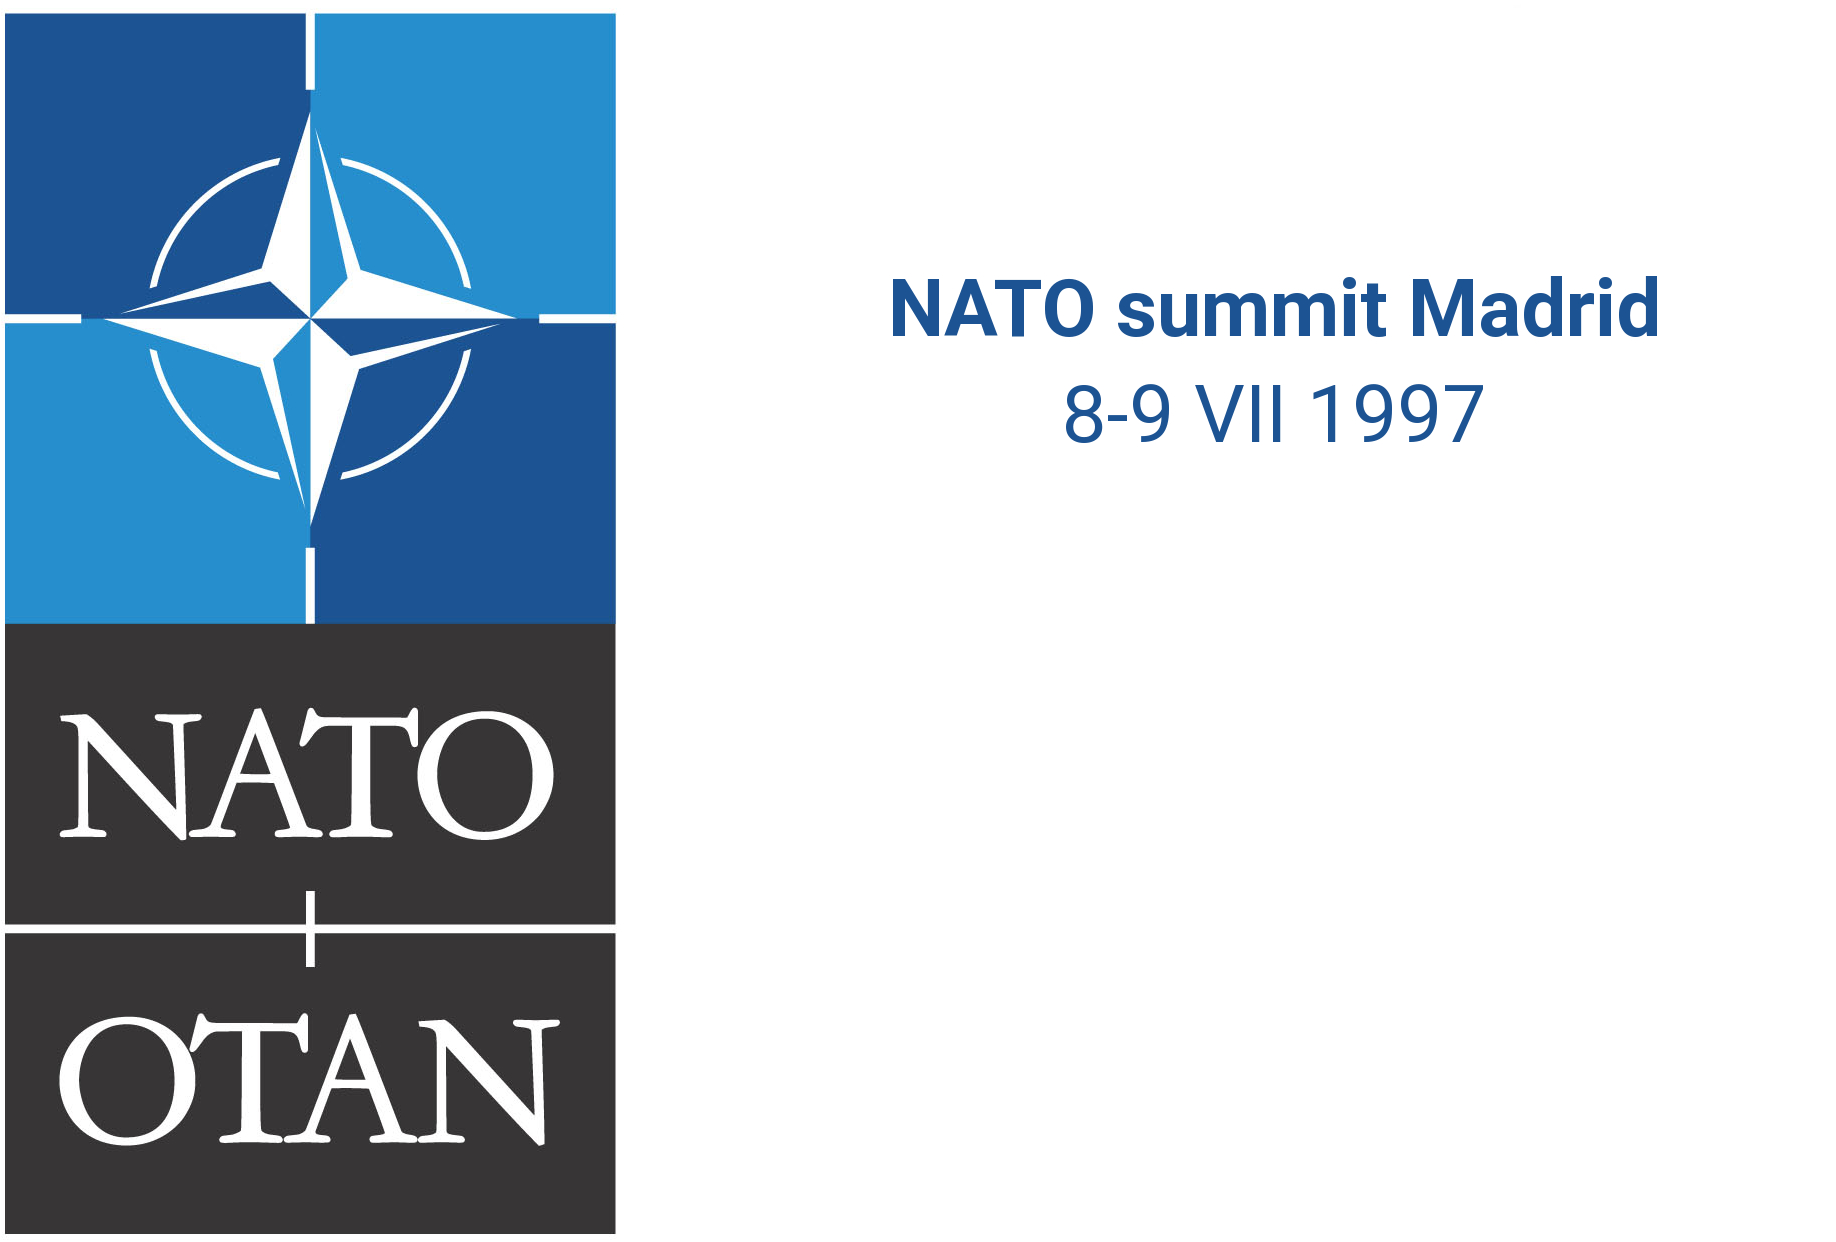 https://www.yizuo-media.com/photos/new/albums/userpics/10001/2/NATO_summit_Madrid.jpg